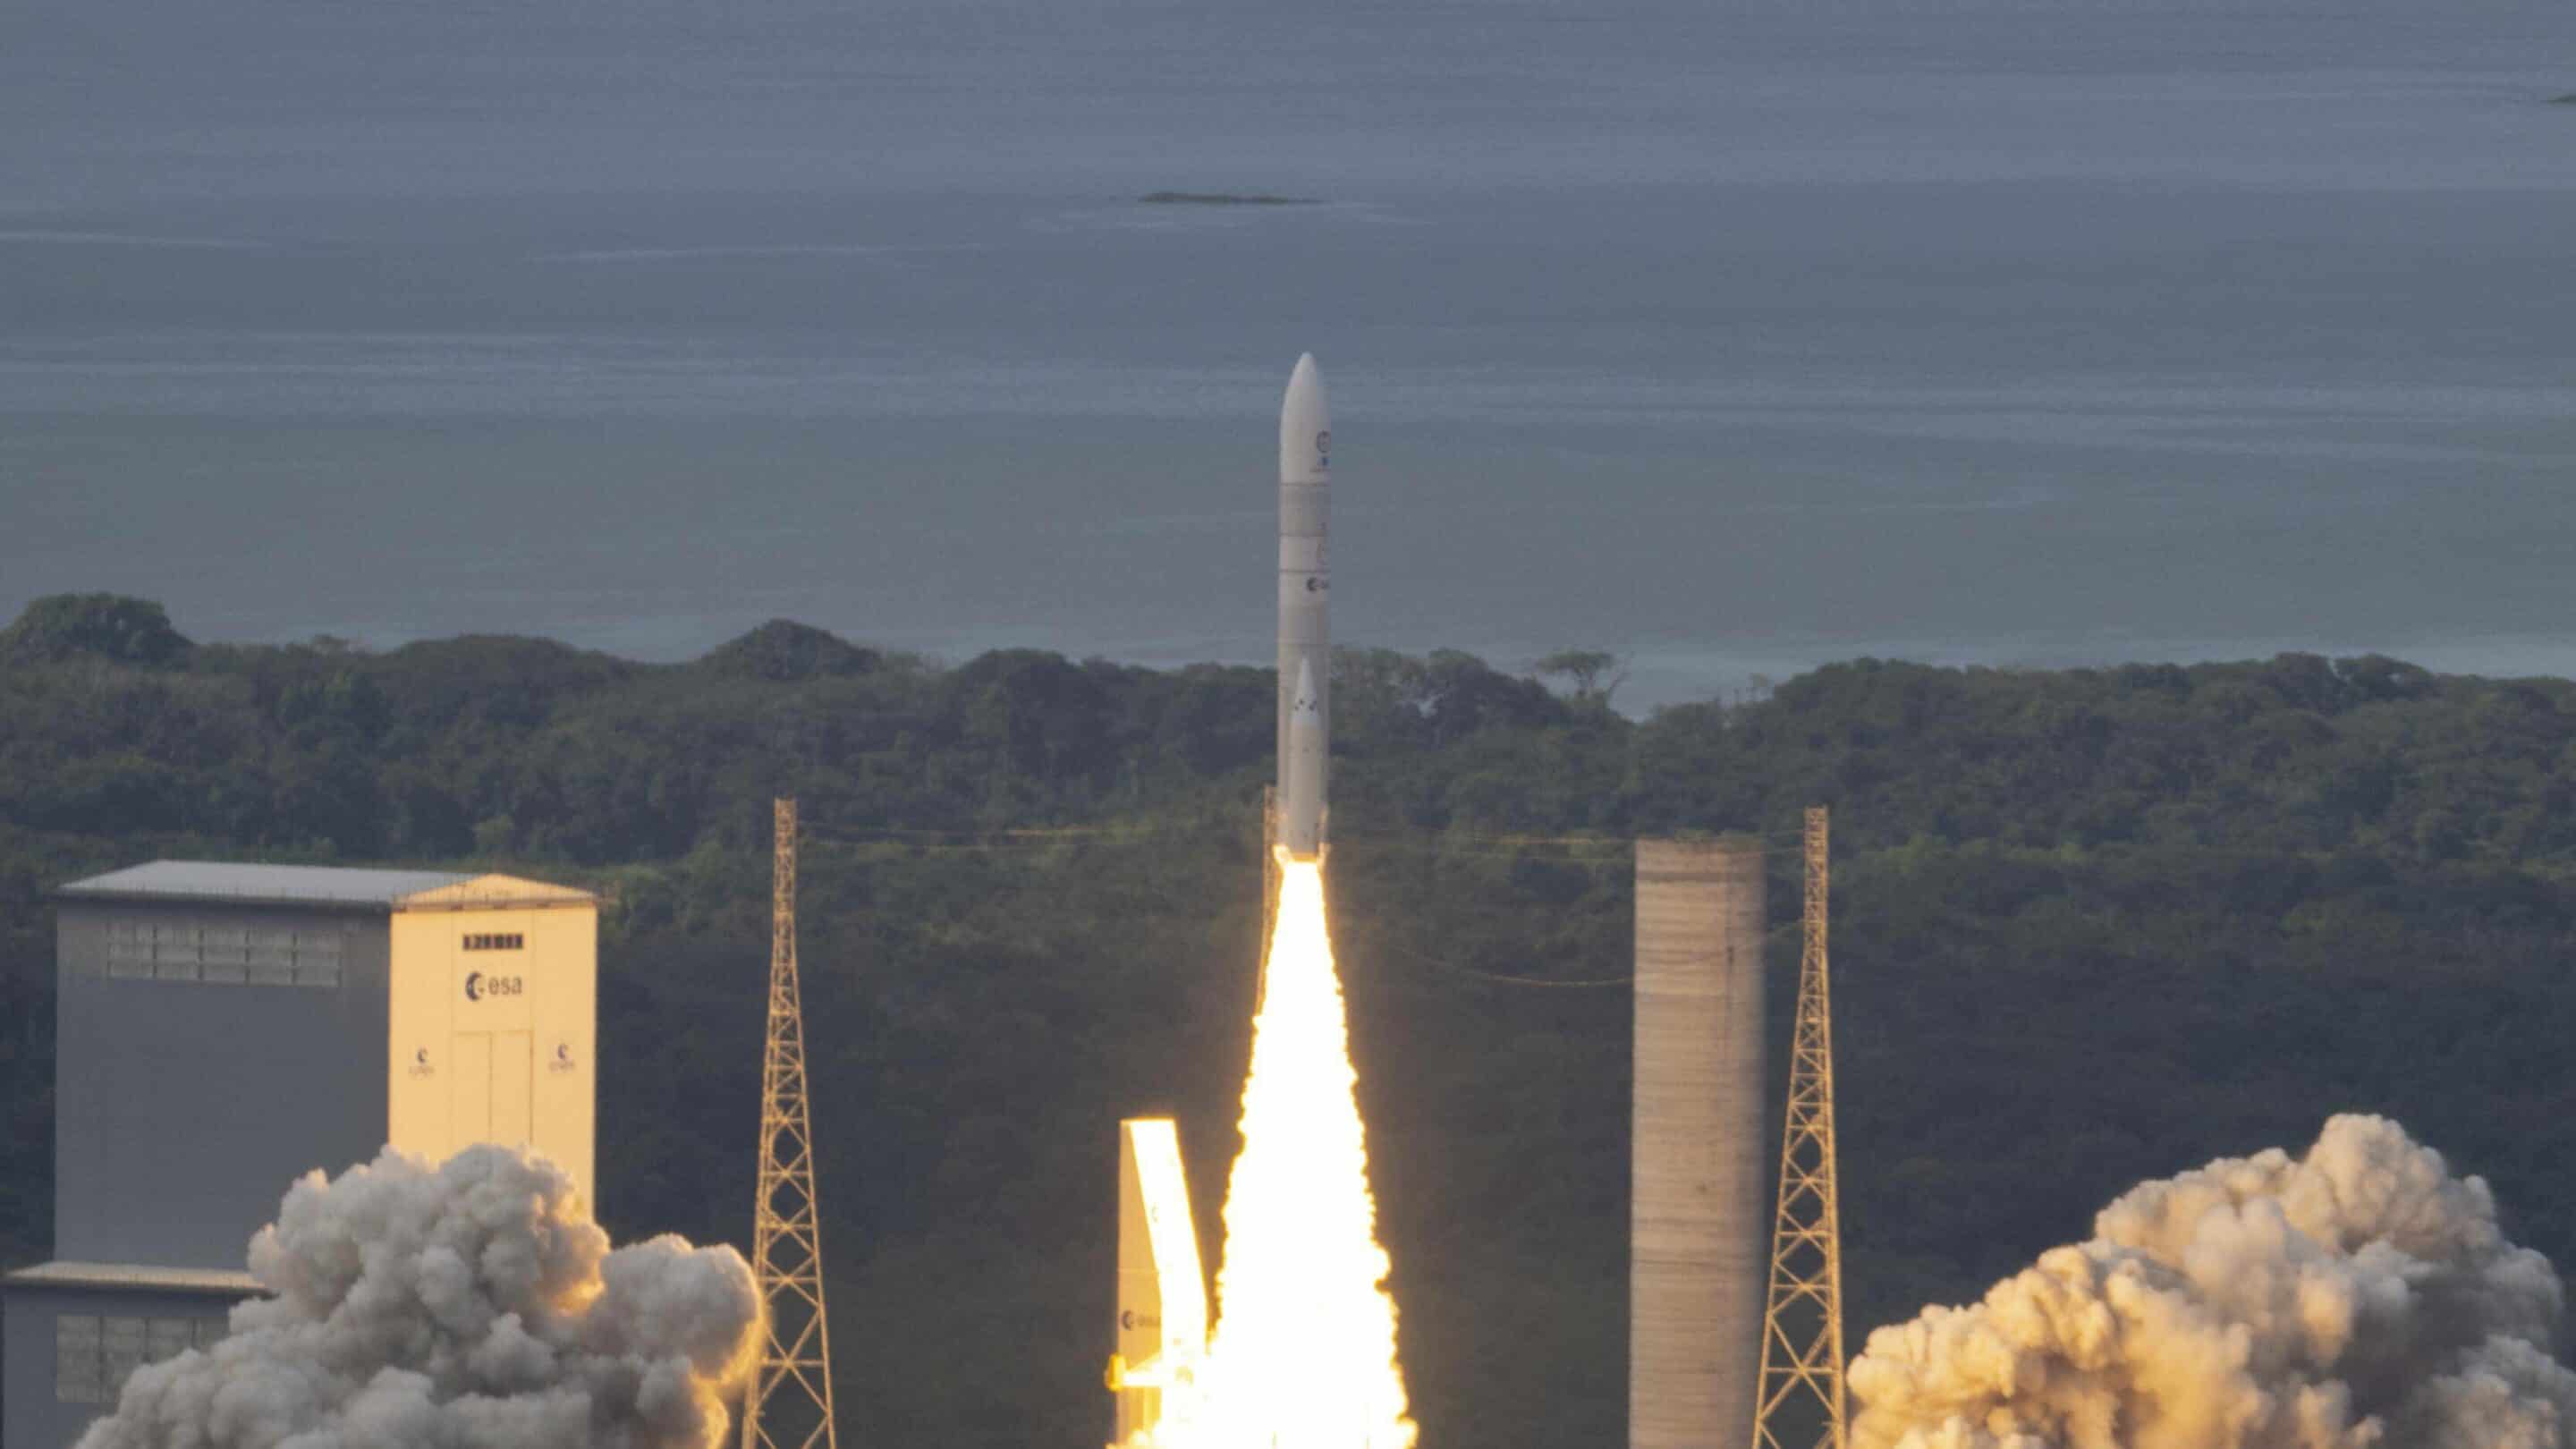 Europe’s new heavy-lift rocket, Ariane 6.
(c) Sipa